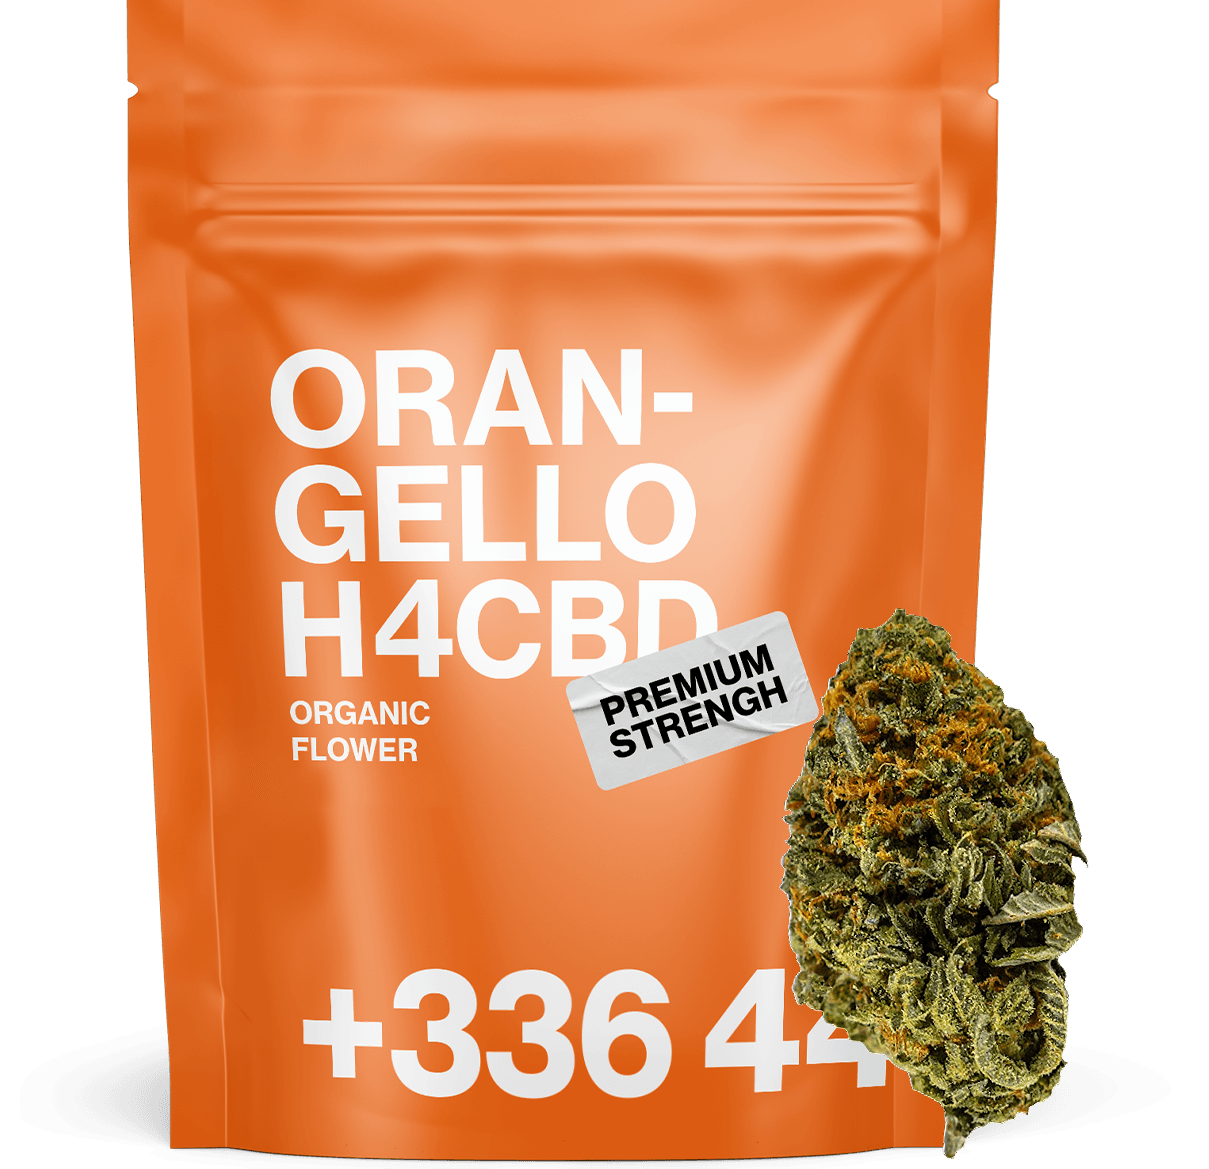 Orangello Premium Fleur H4CBD by tealer420